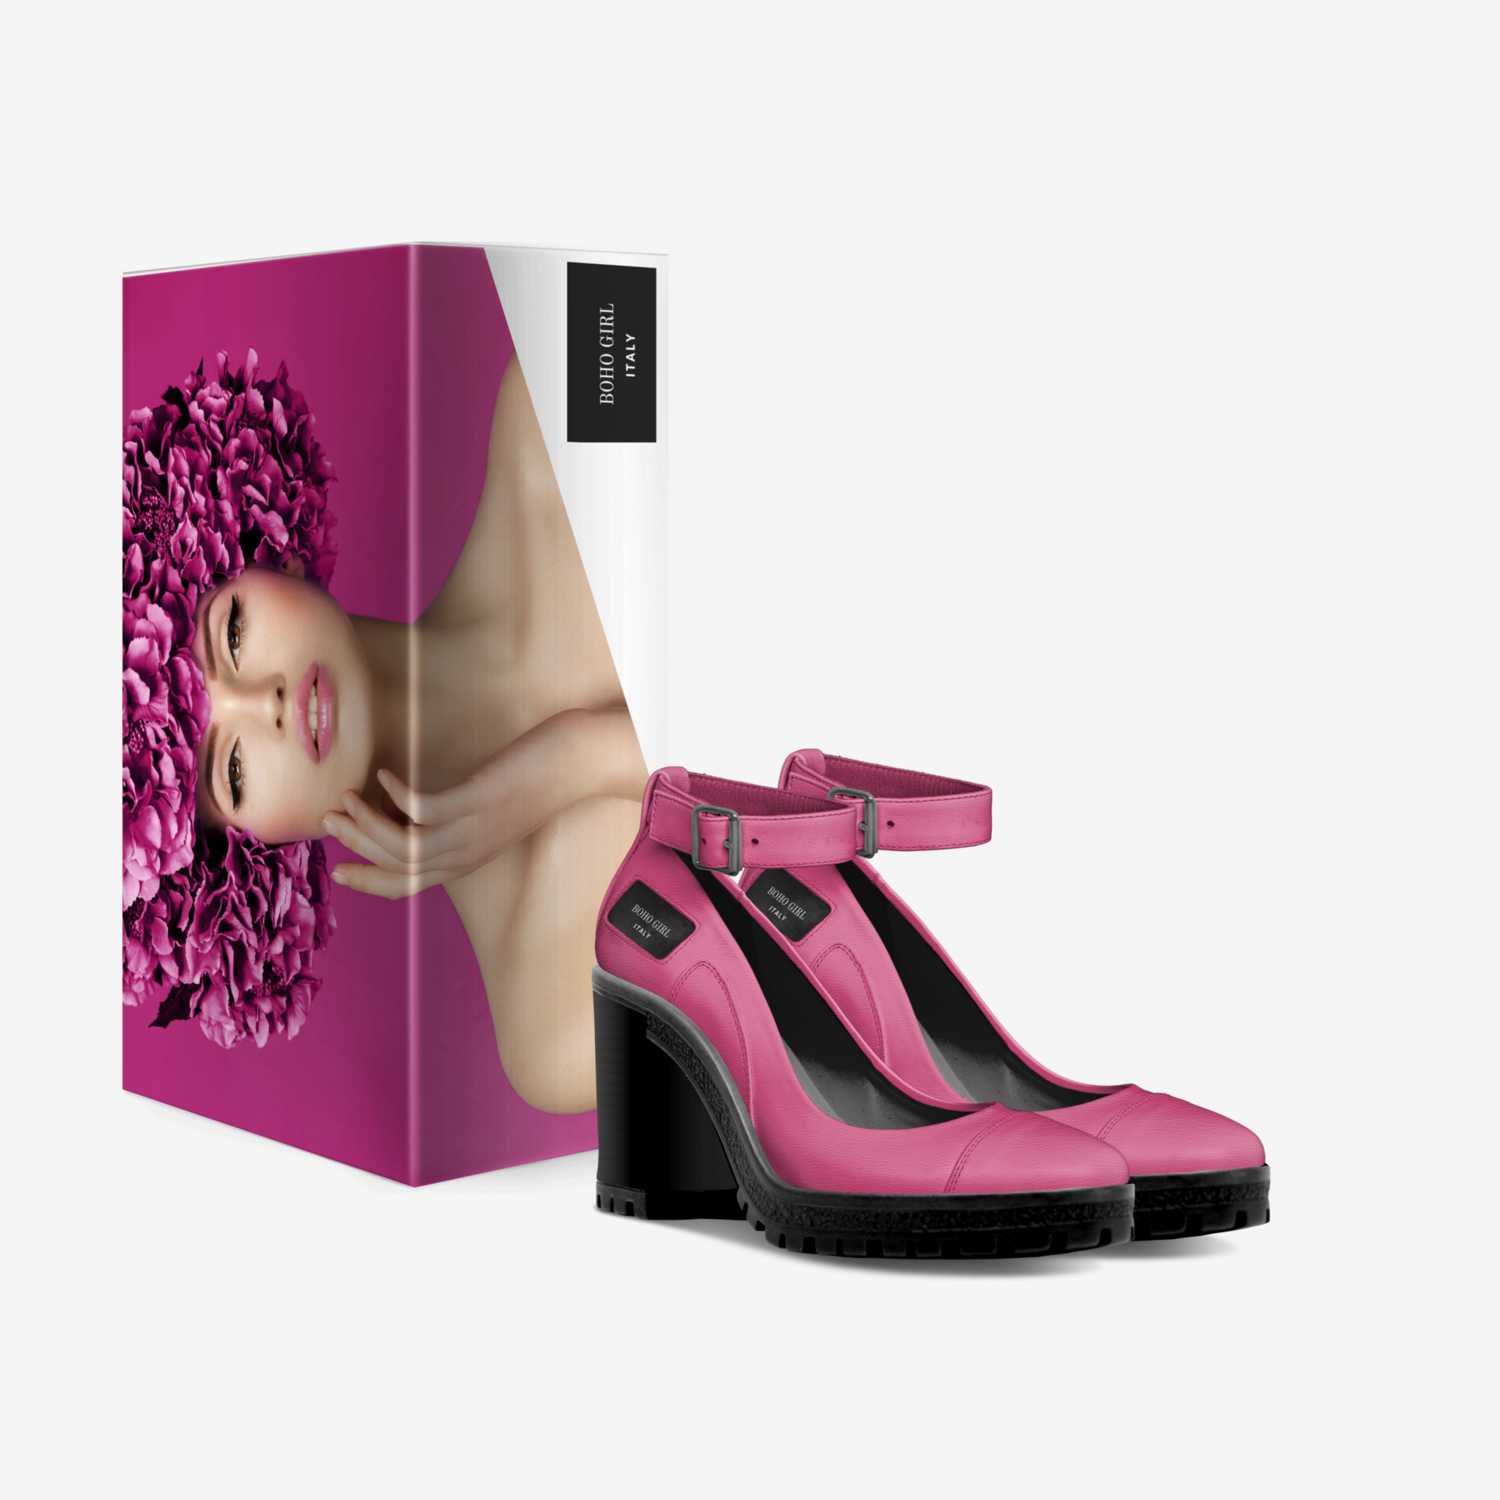 BOHO GIRL custom made in Italy shoes by Marijke Verkerk | Box view